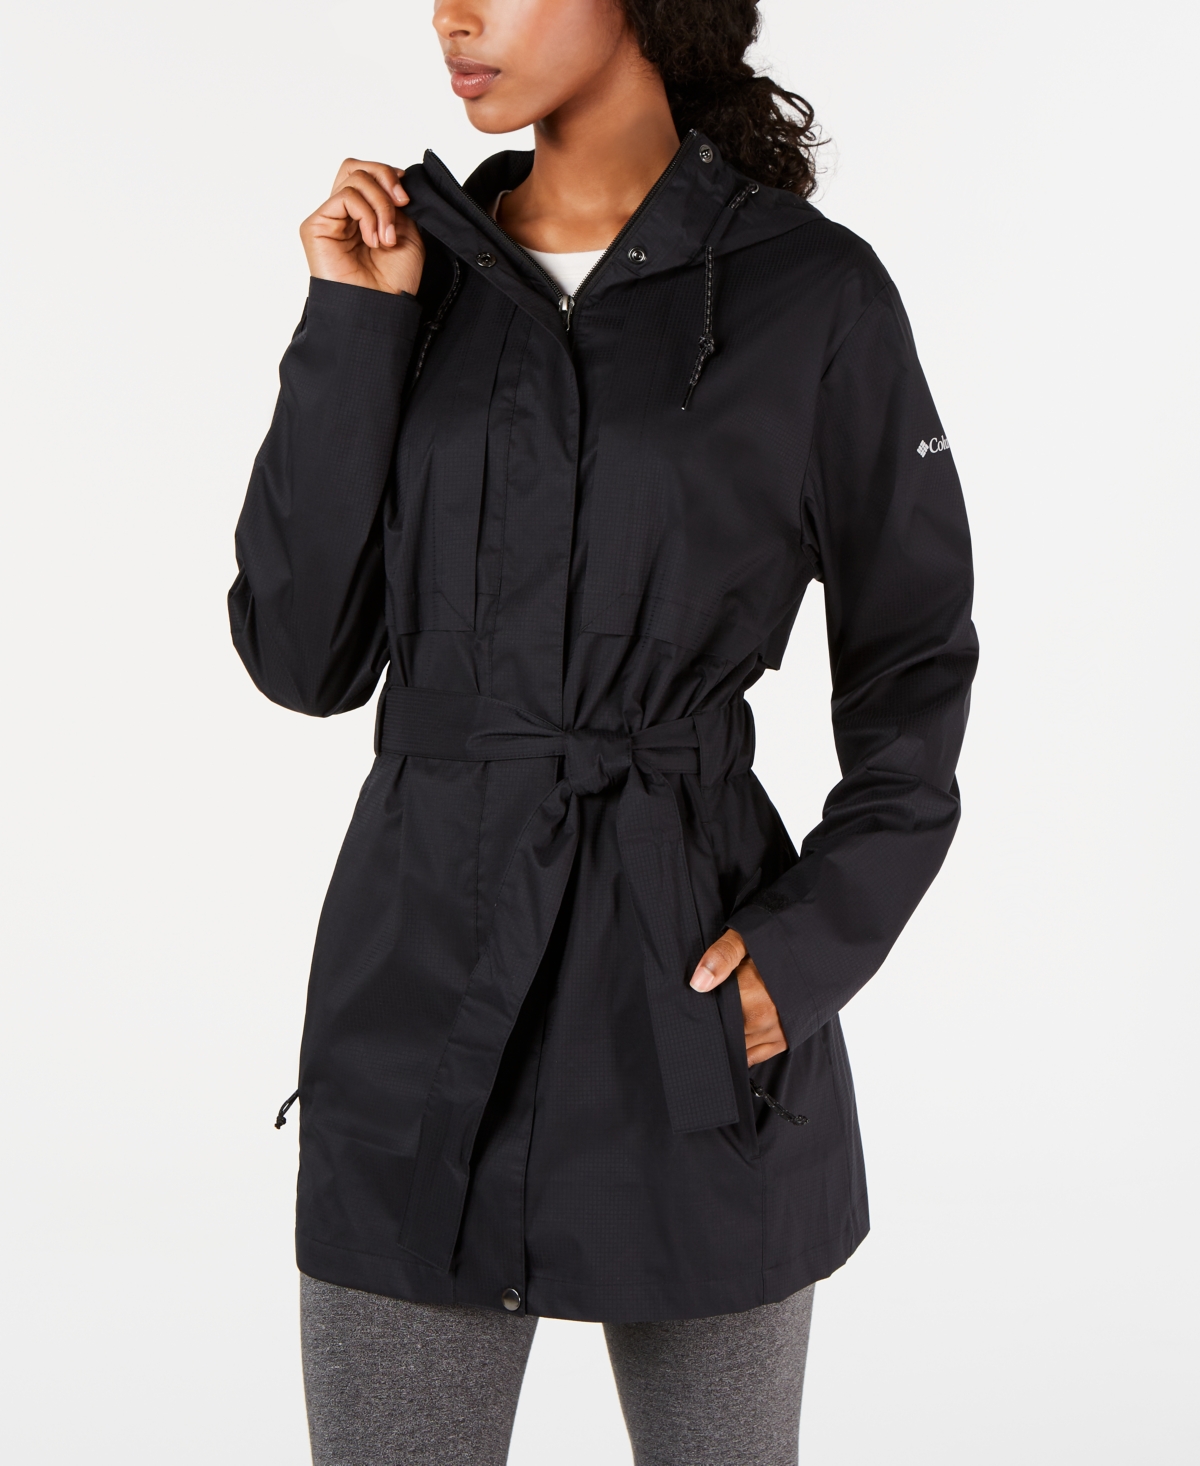 Columbia Women's Pardon My Trench Water-Resistant Rain Jacket